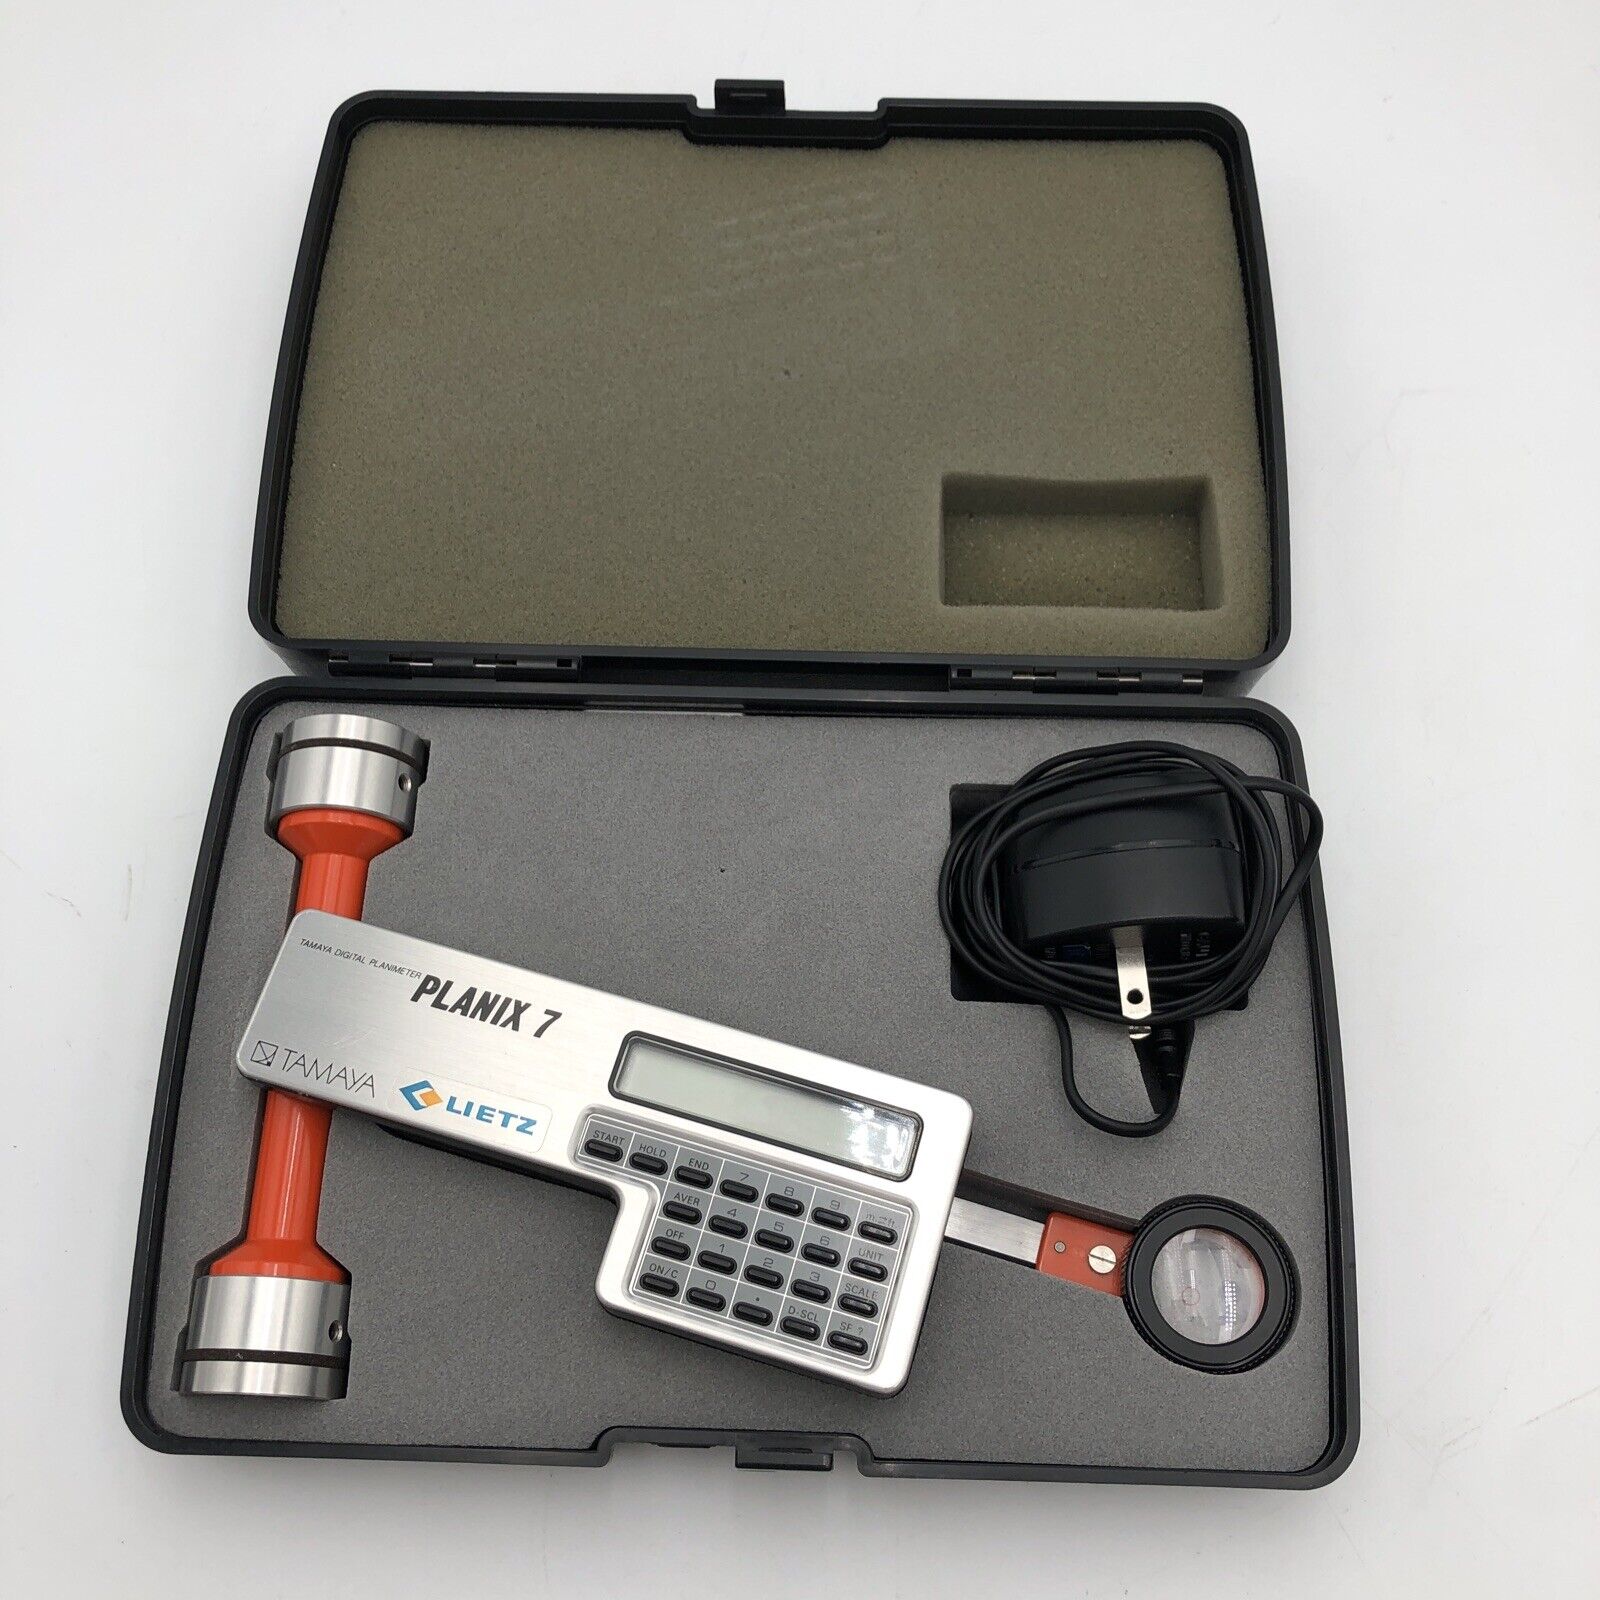 Tamaya Planix 7 Digital Planimeter  rechargeable battery W/ Carrying Case READ A